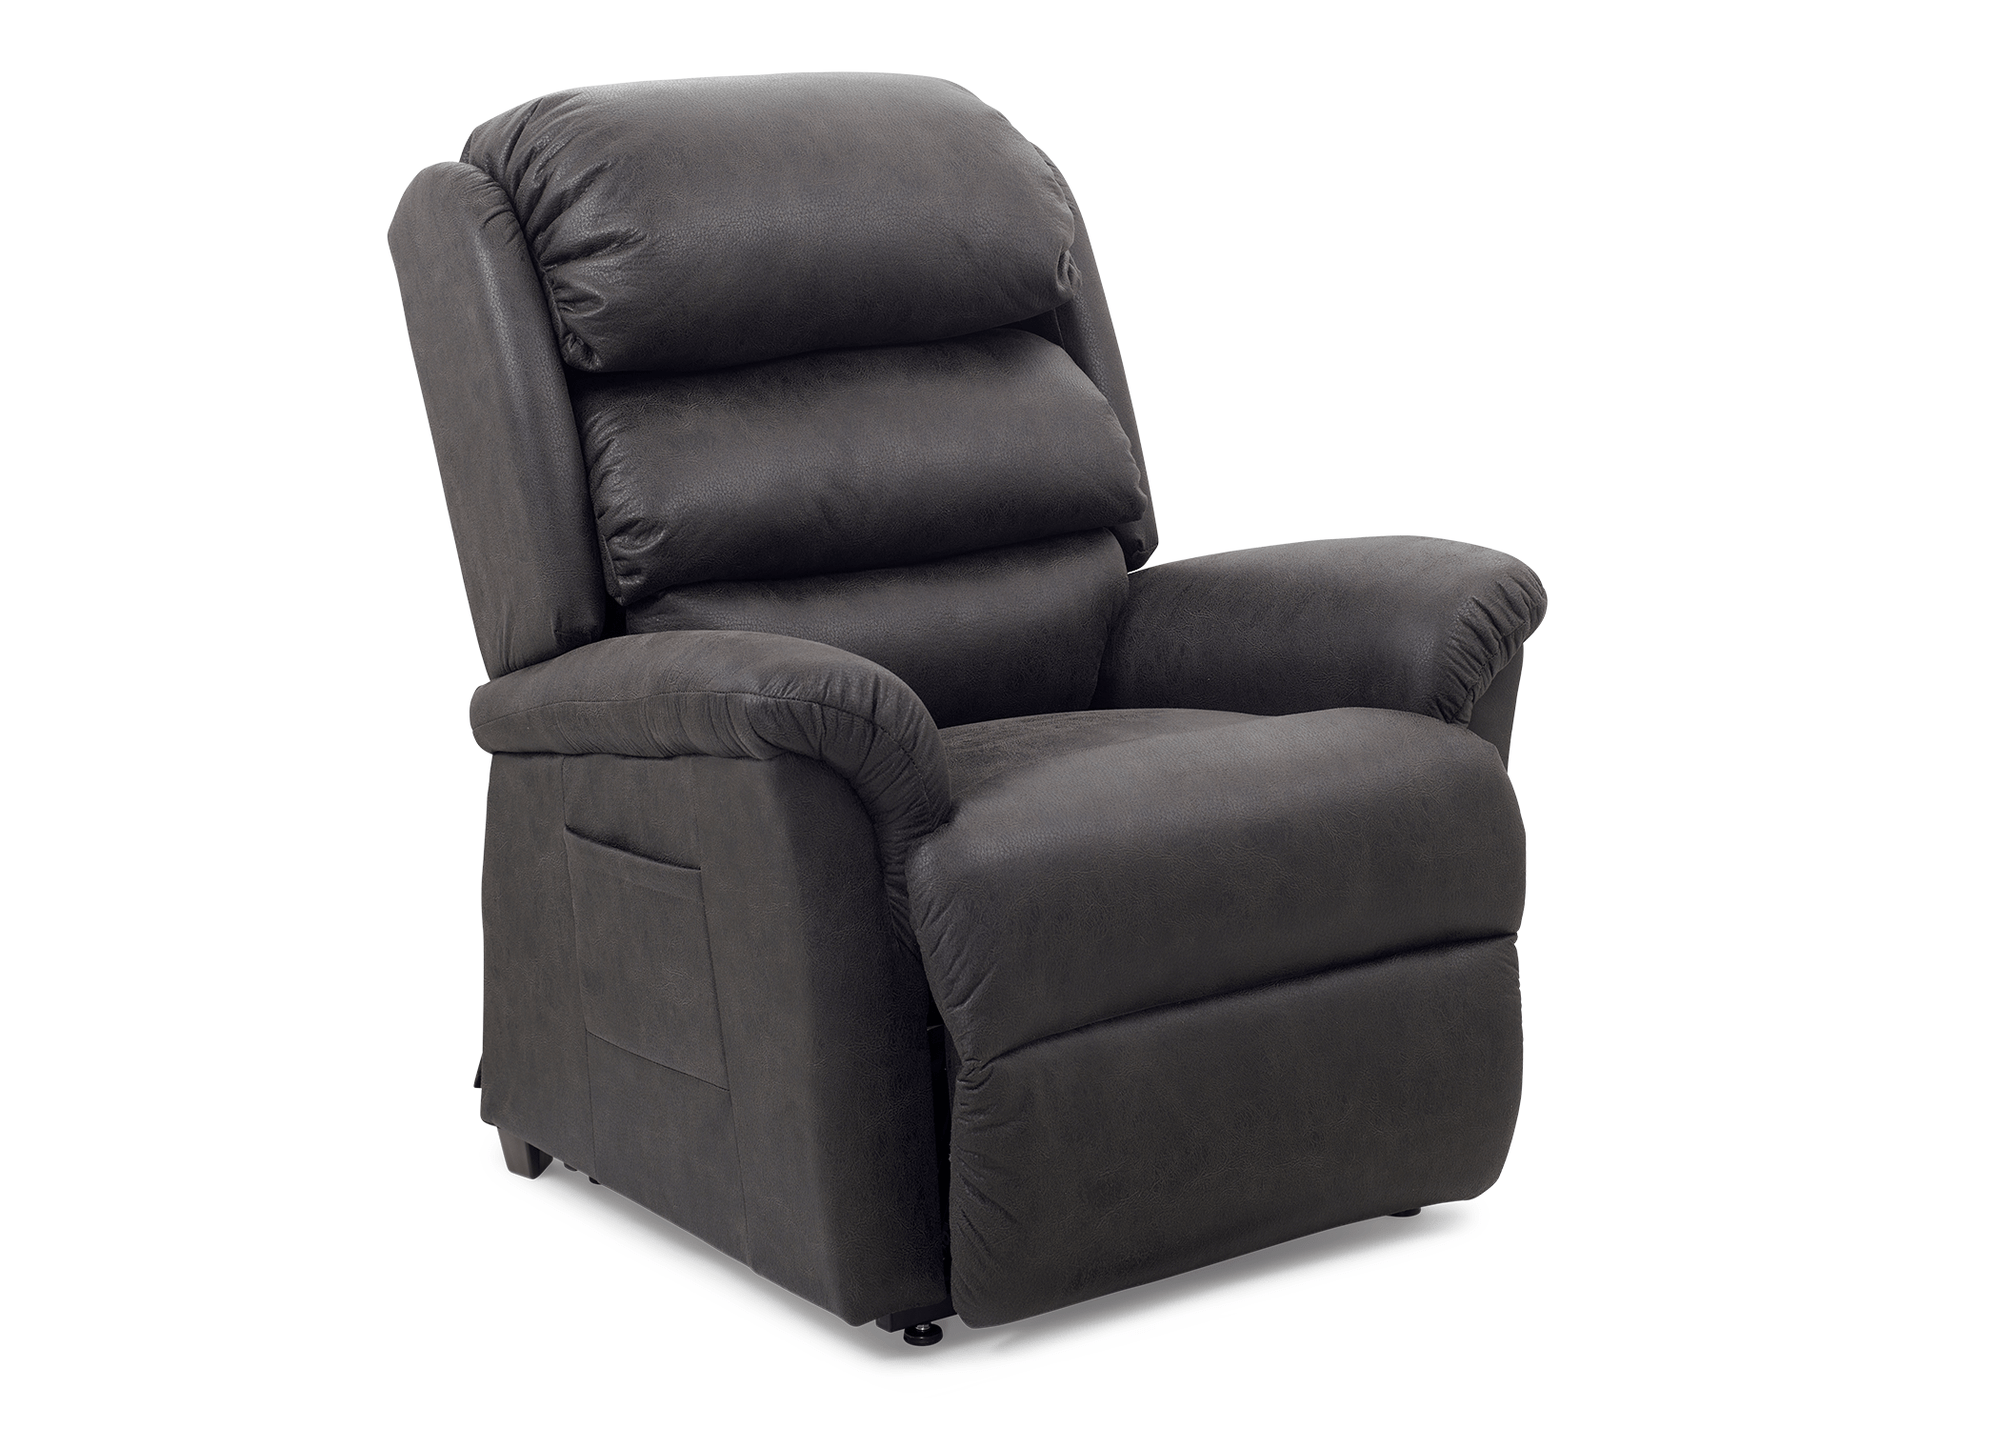 ULTRACOMFORT 3-Position Lift Chair JZ Smoke UltraComfort UC549-M26 Medium Wide Mira 1 Zone 3 Position Lift Chair